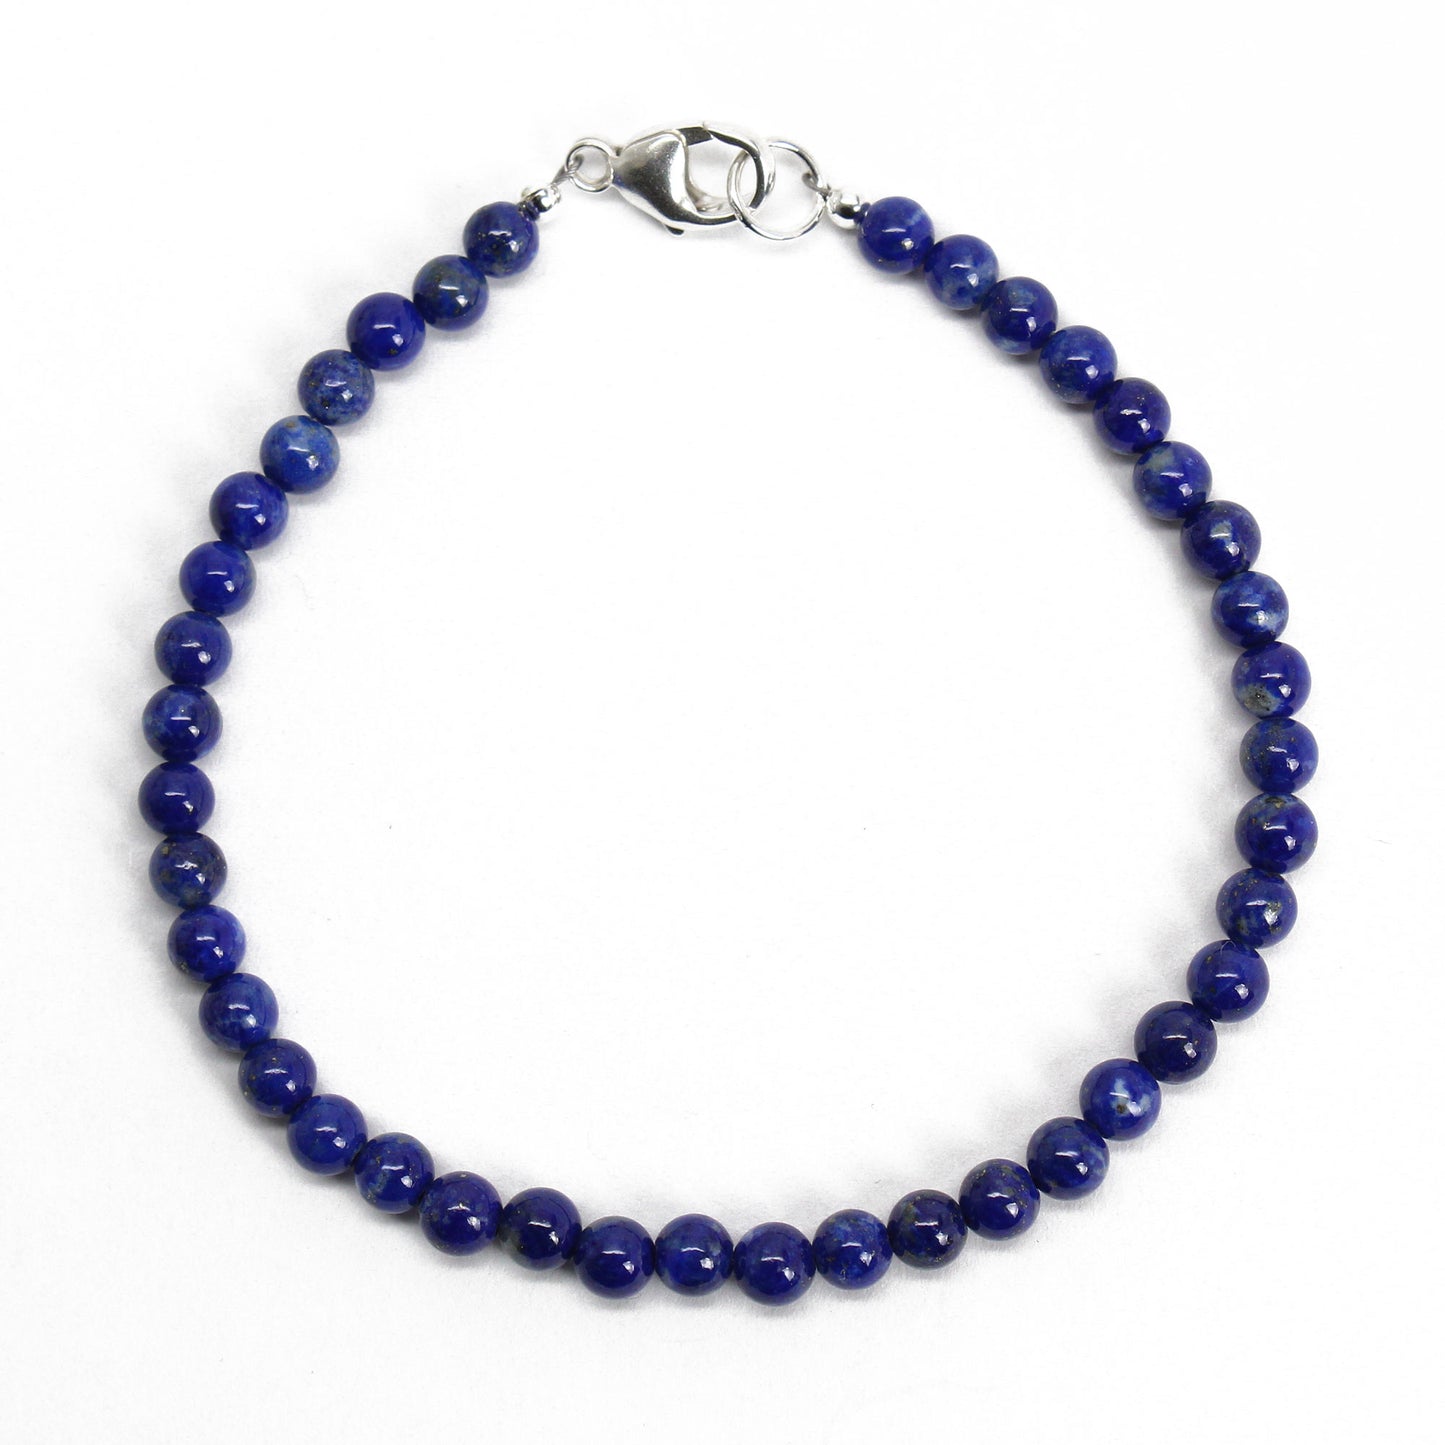 Small Rounded Fine Stone and Sterling Silver Medal Bracelet - Lapis Lazuli  - Beads - Range of customizable bracelets.